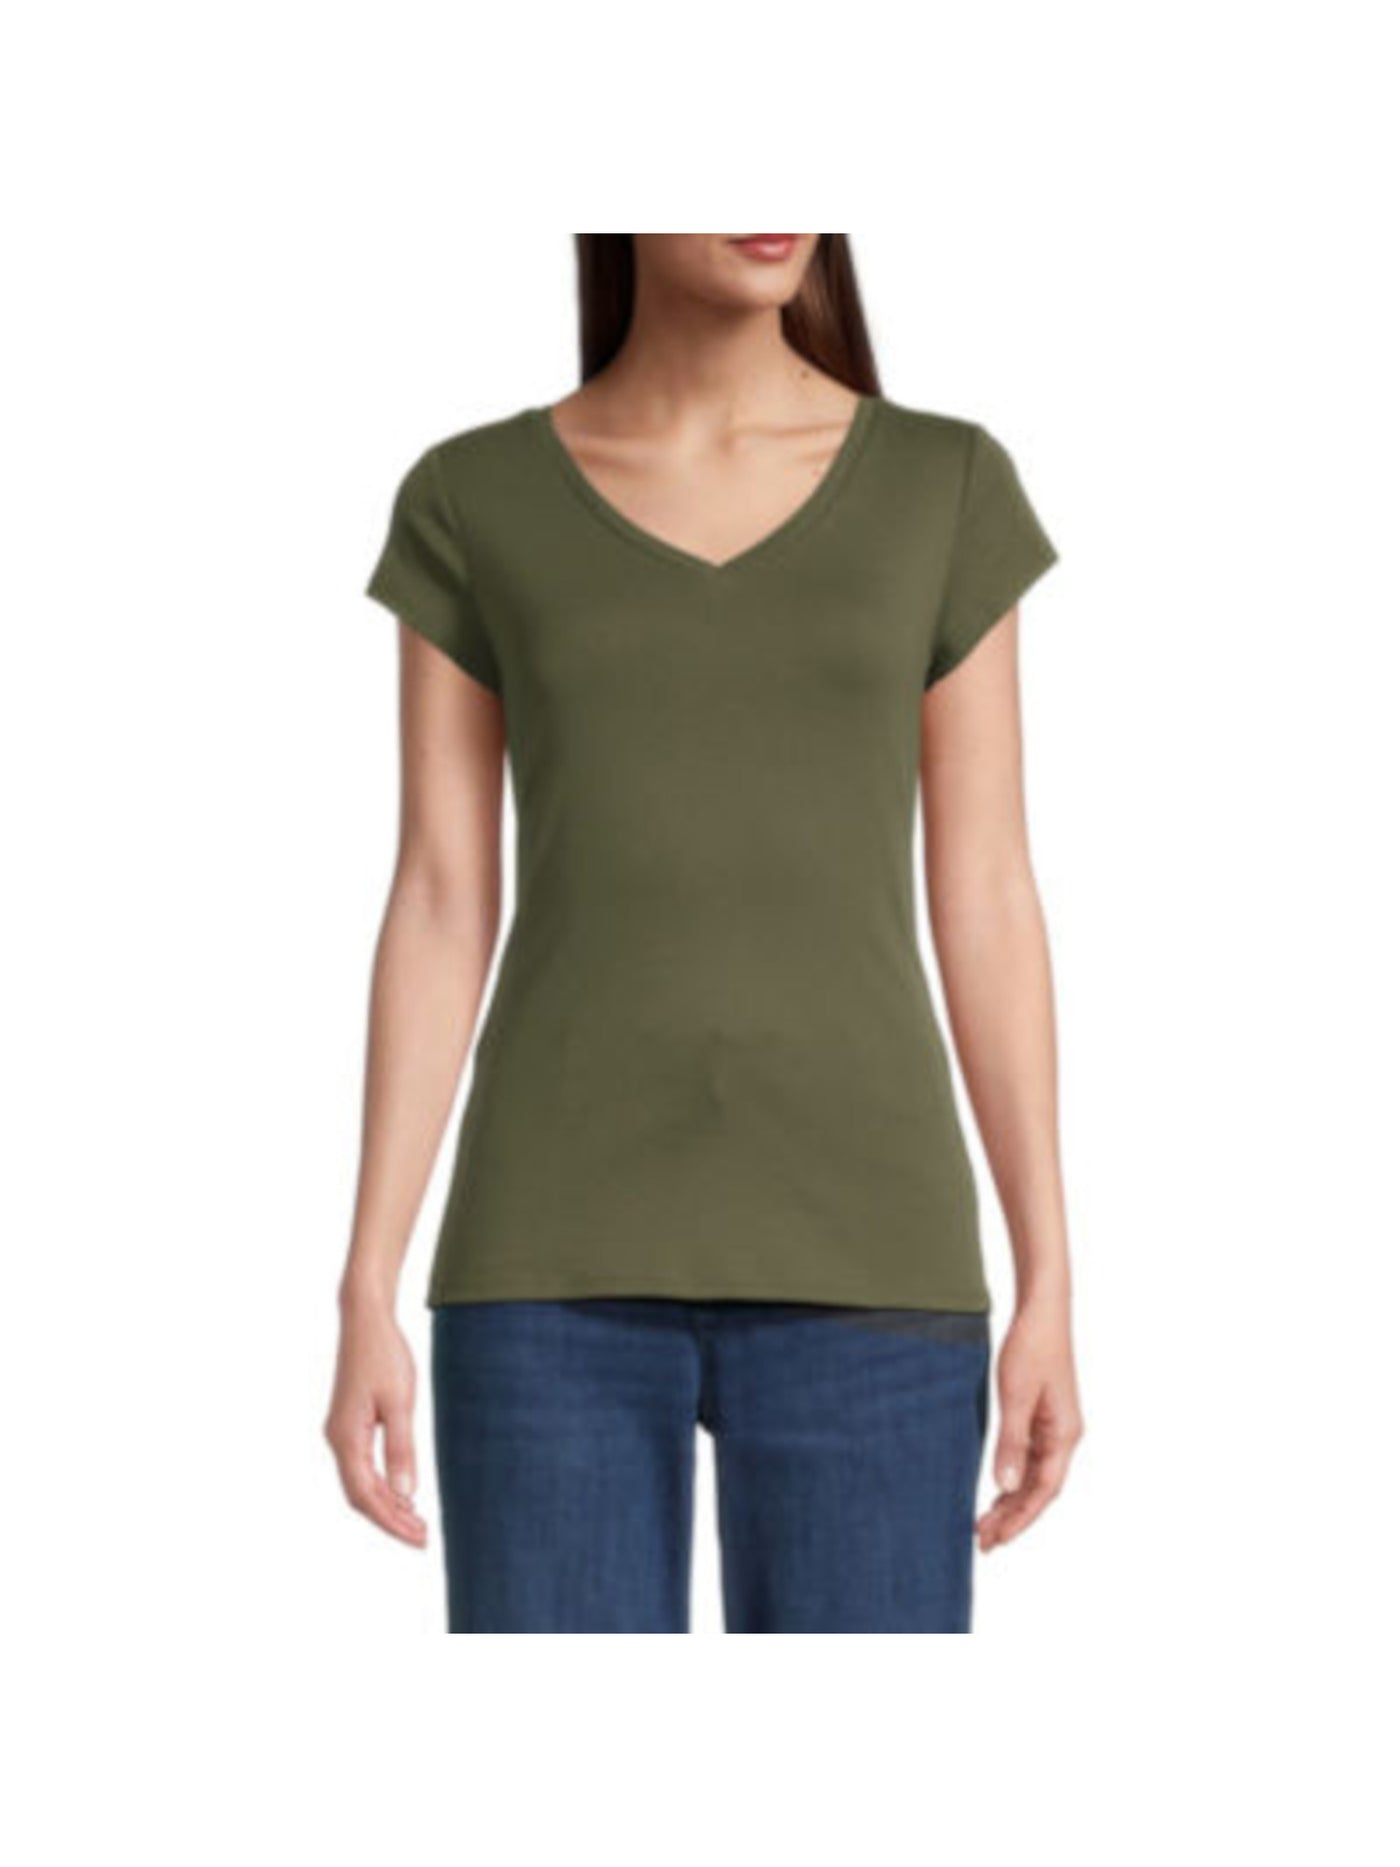 DOLAN Womens Green Stretch Ribbed Short Sleeve V Neck T-Shirt L